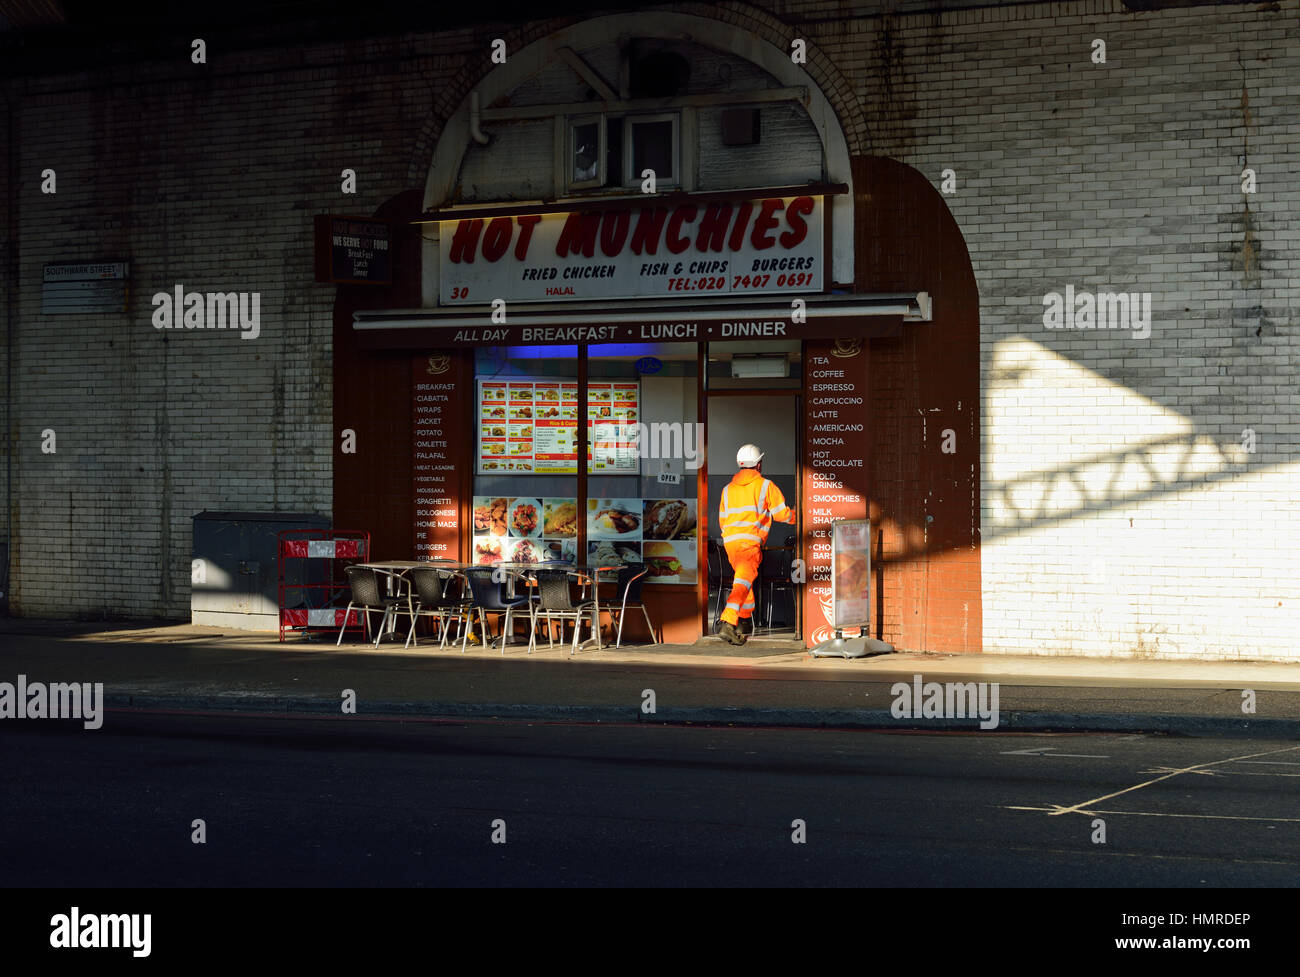 Hot Munchies cafe, Railway Arch, Southwark Street, London SE1, United Kingdom Stock Photo